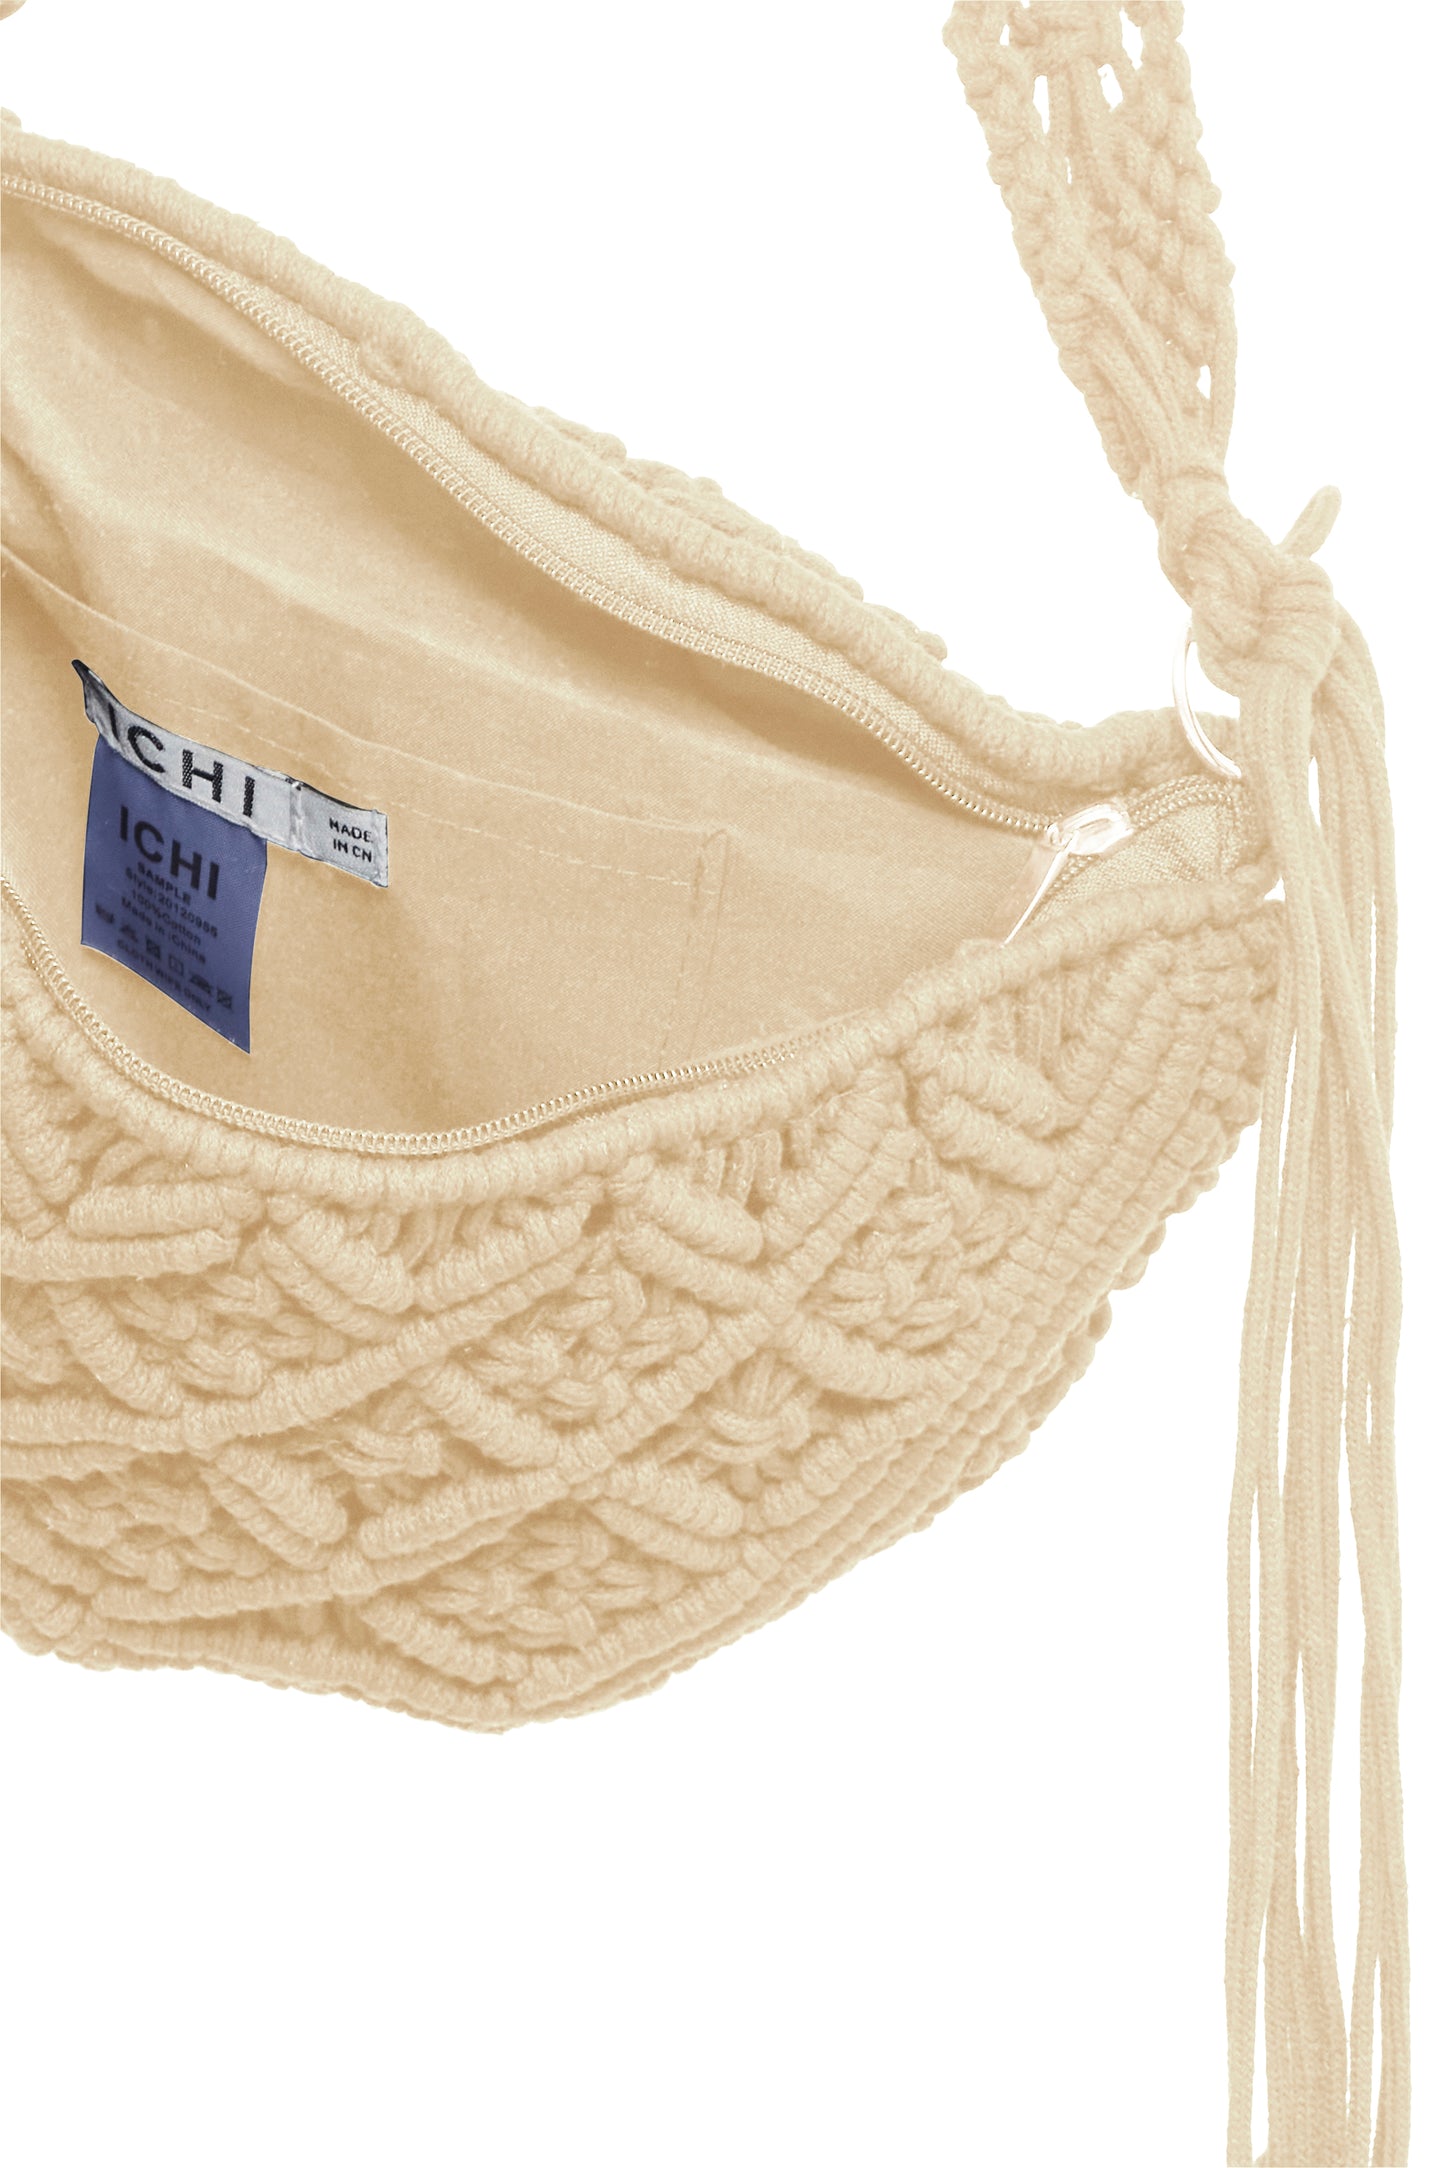 ICHI Veran Crochet Bag - Birch